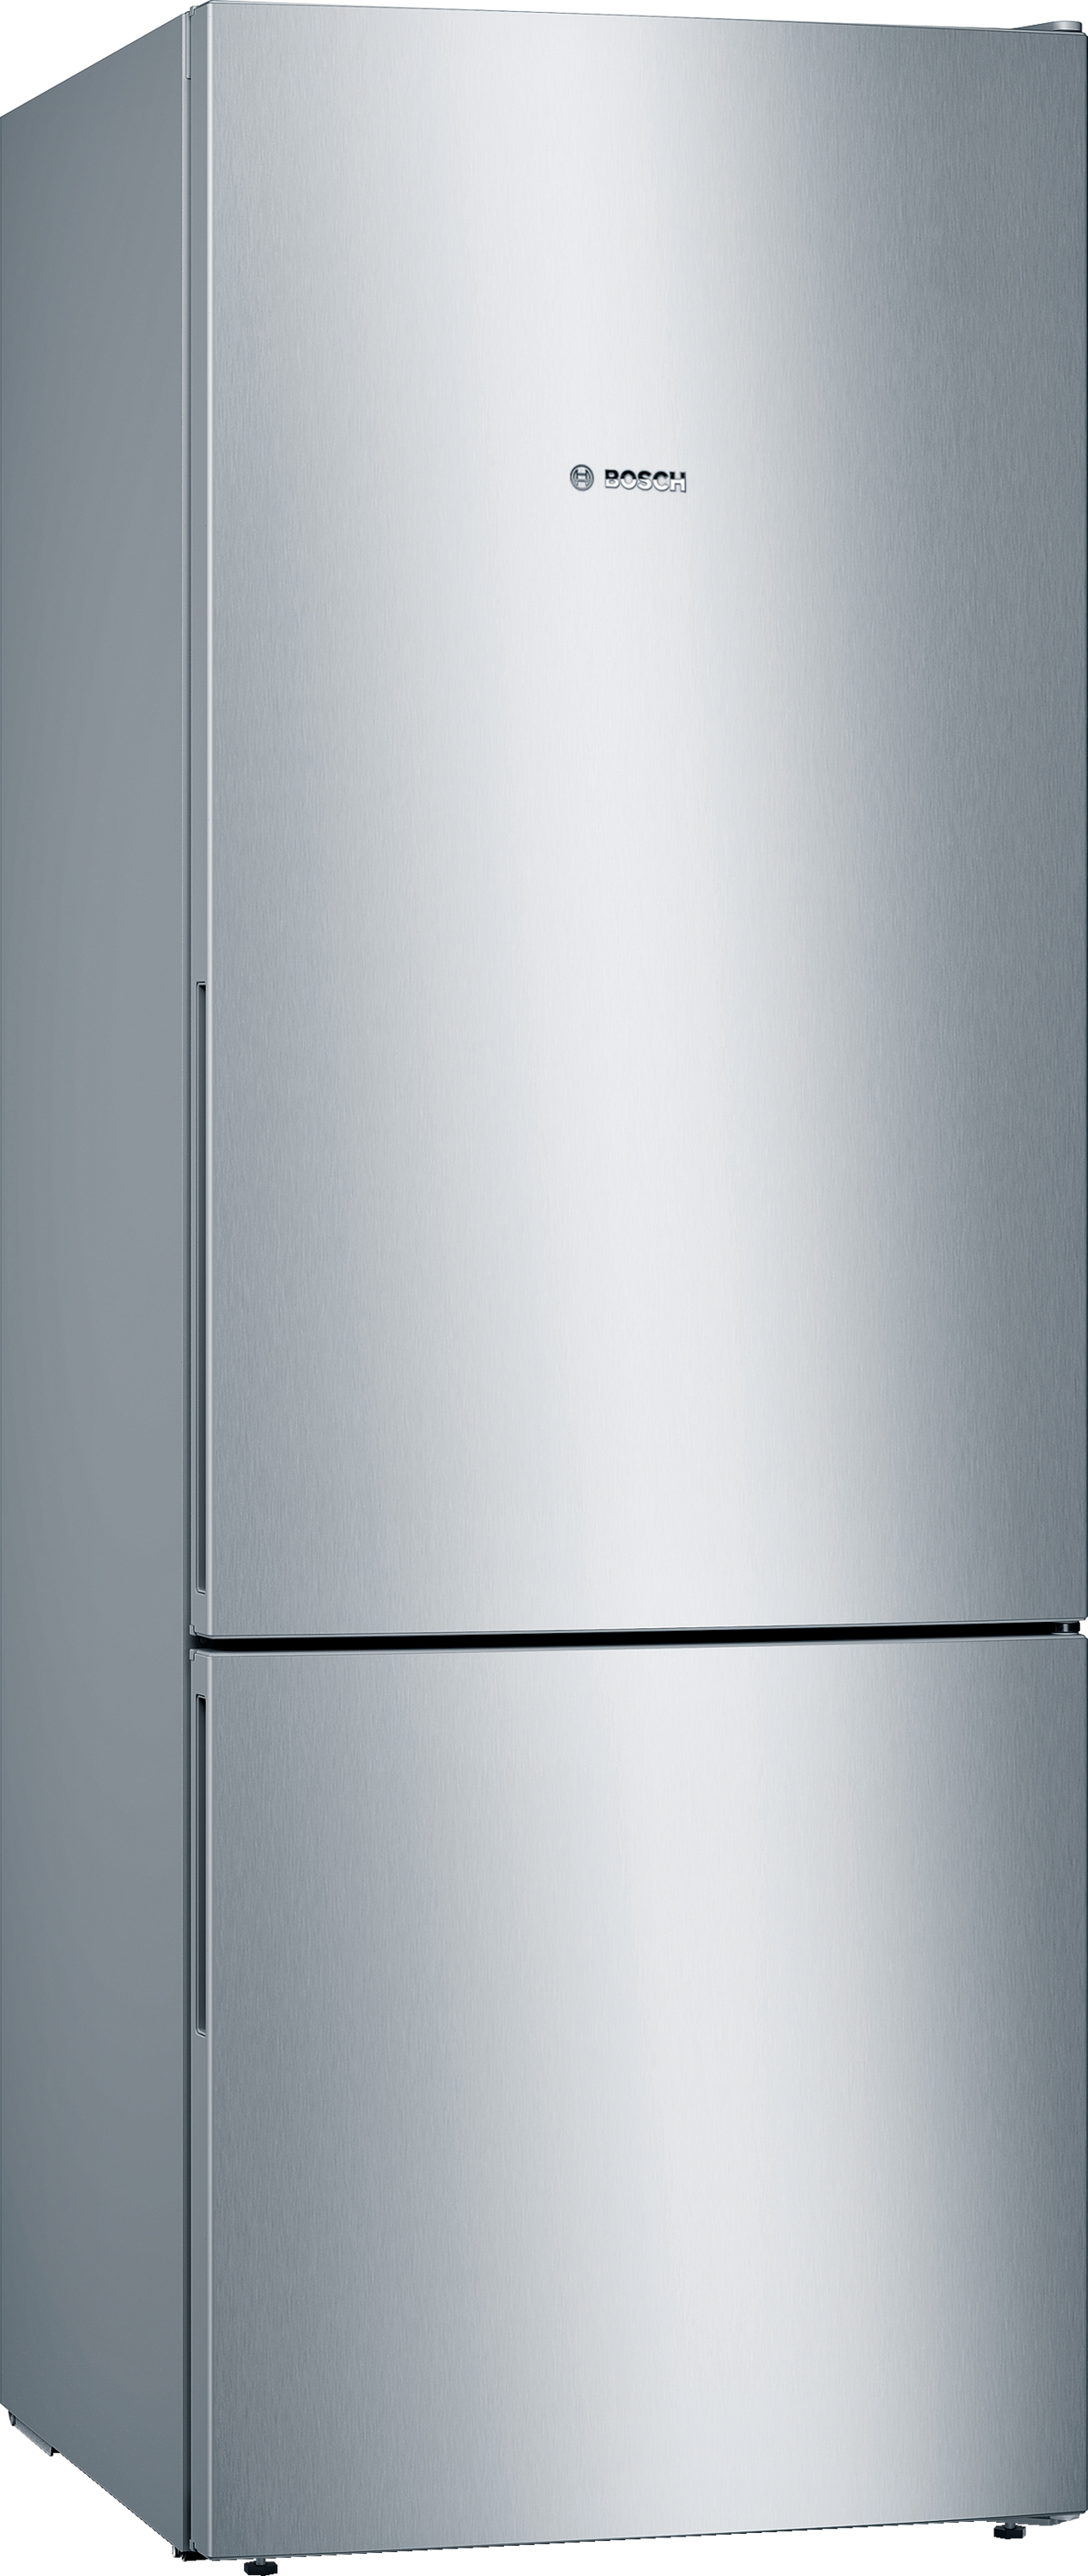 KGV58VLEAS, Samostojeći frižider sa zamrzivačem dole